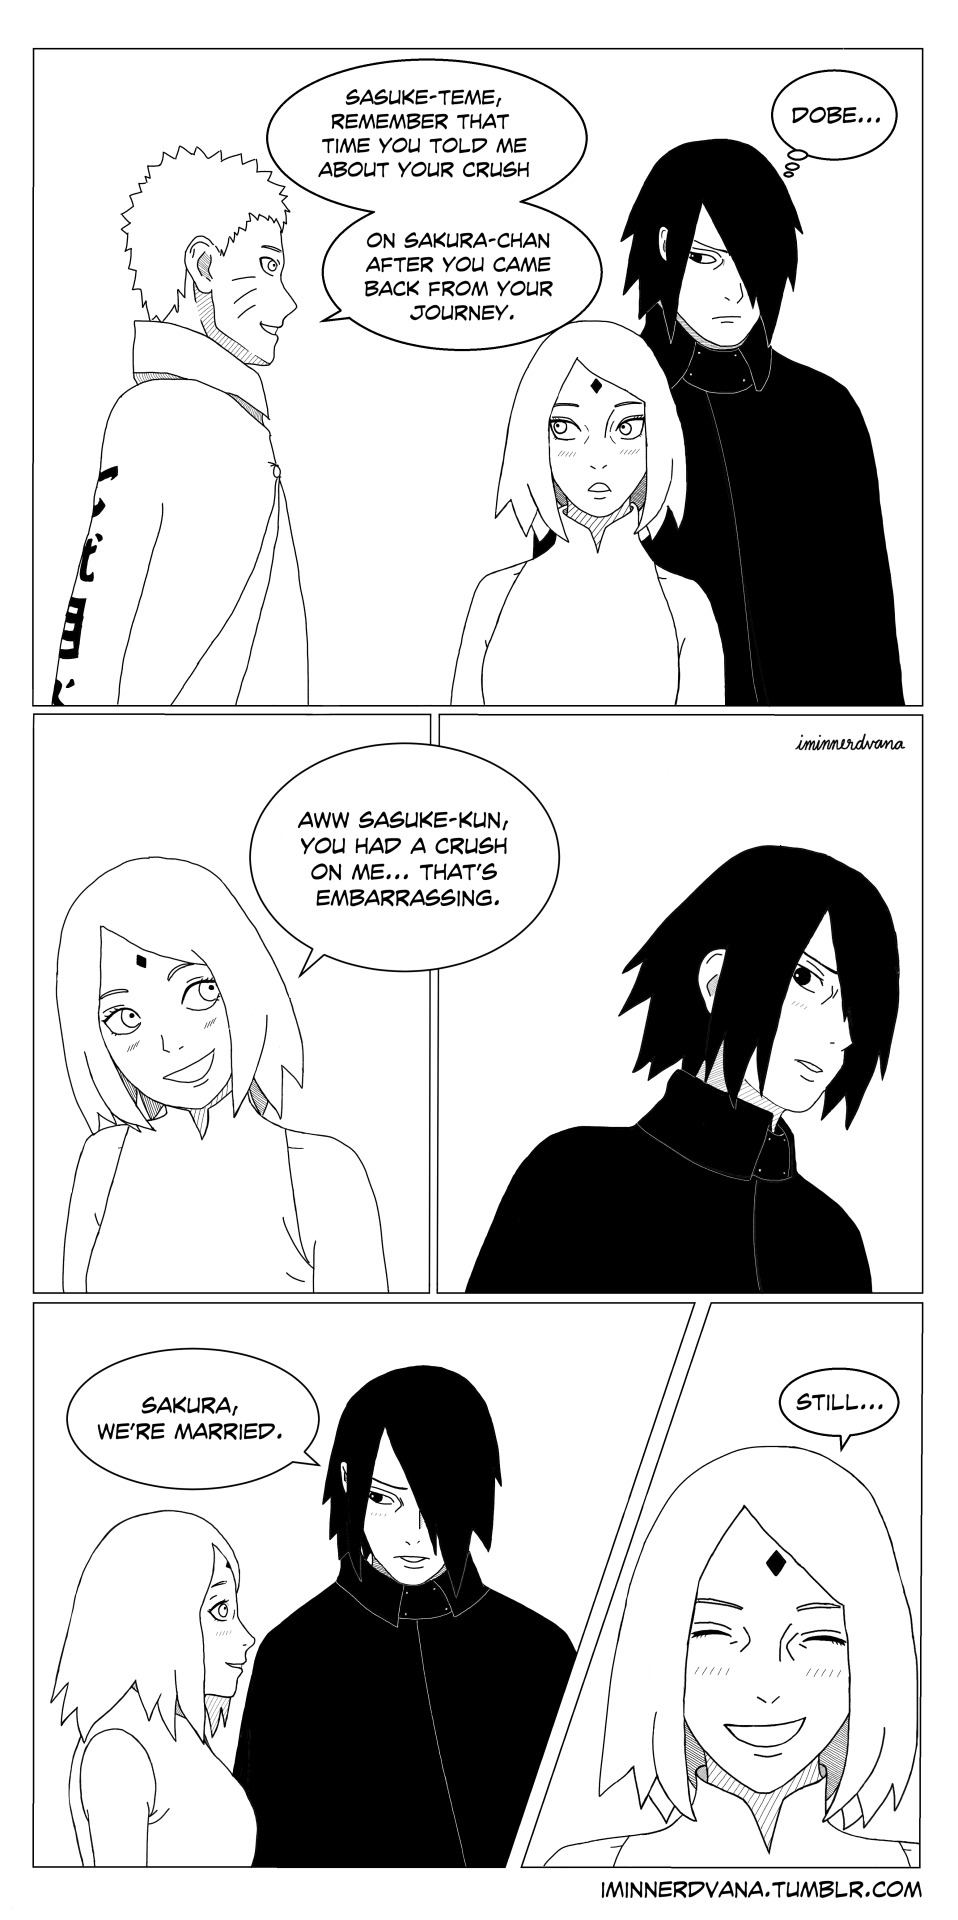 Sasuke and sakura comic